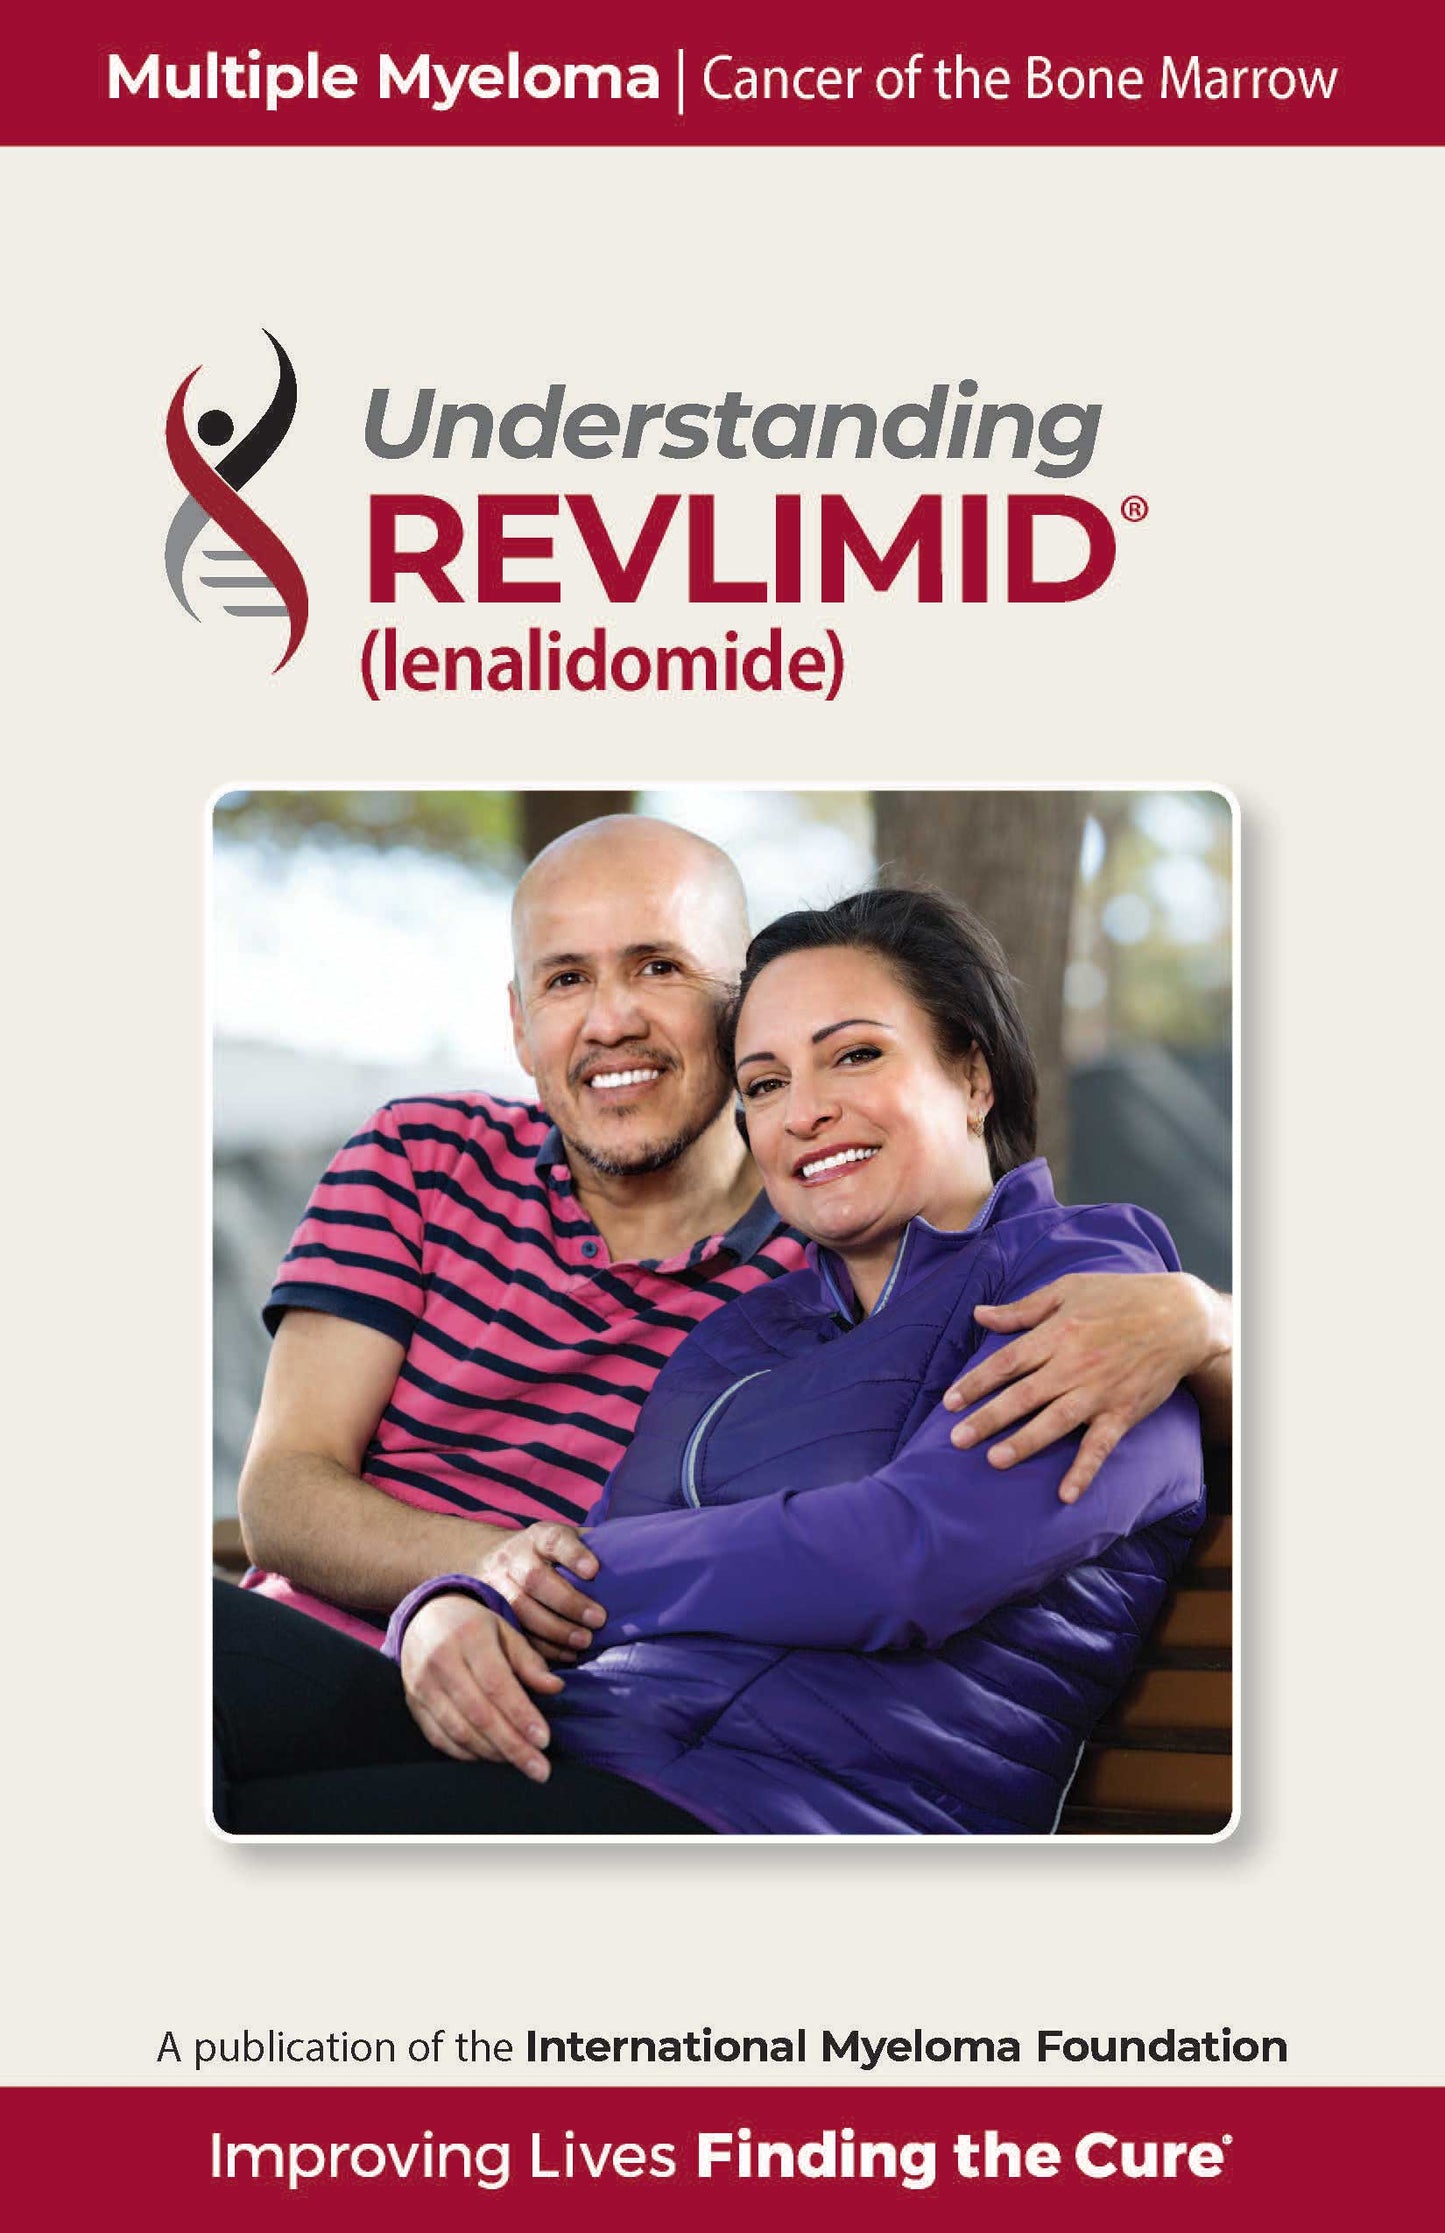 IMF Publication - Understanding Revlimid® (lenalidomide)